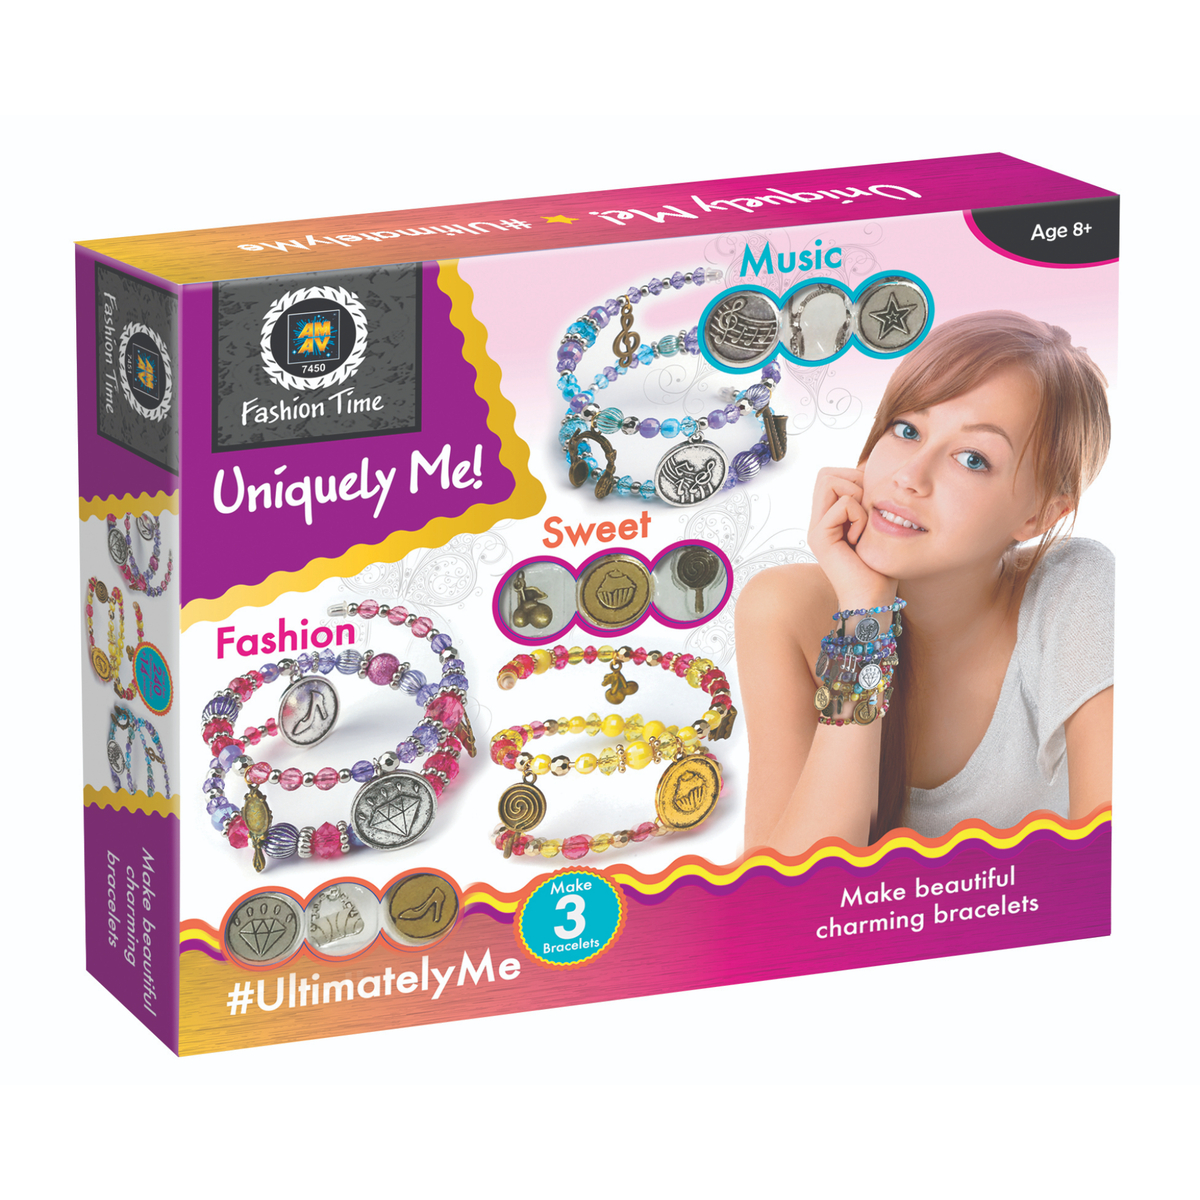 Amav Fashion Uniquely Me-Ultimately Me Jewelry Making Kit Toy, Multicolor, 7450